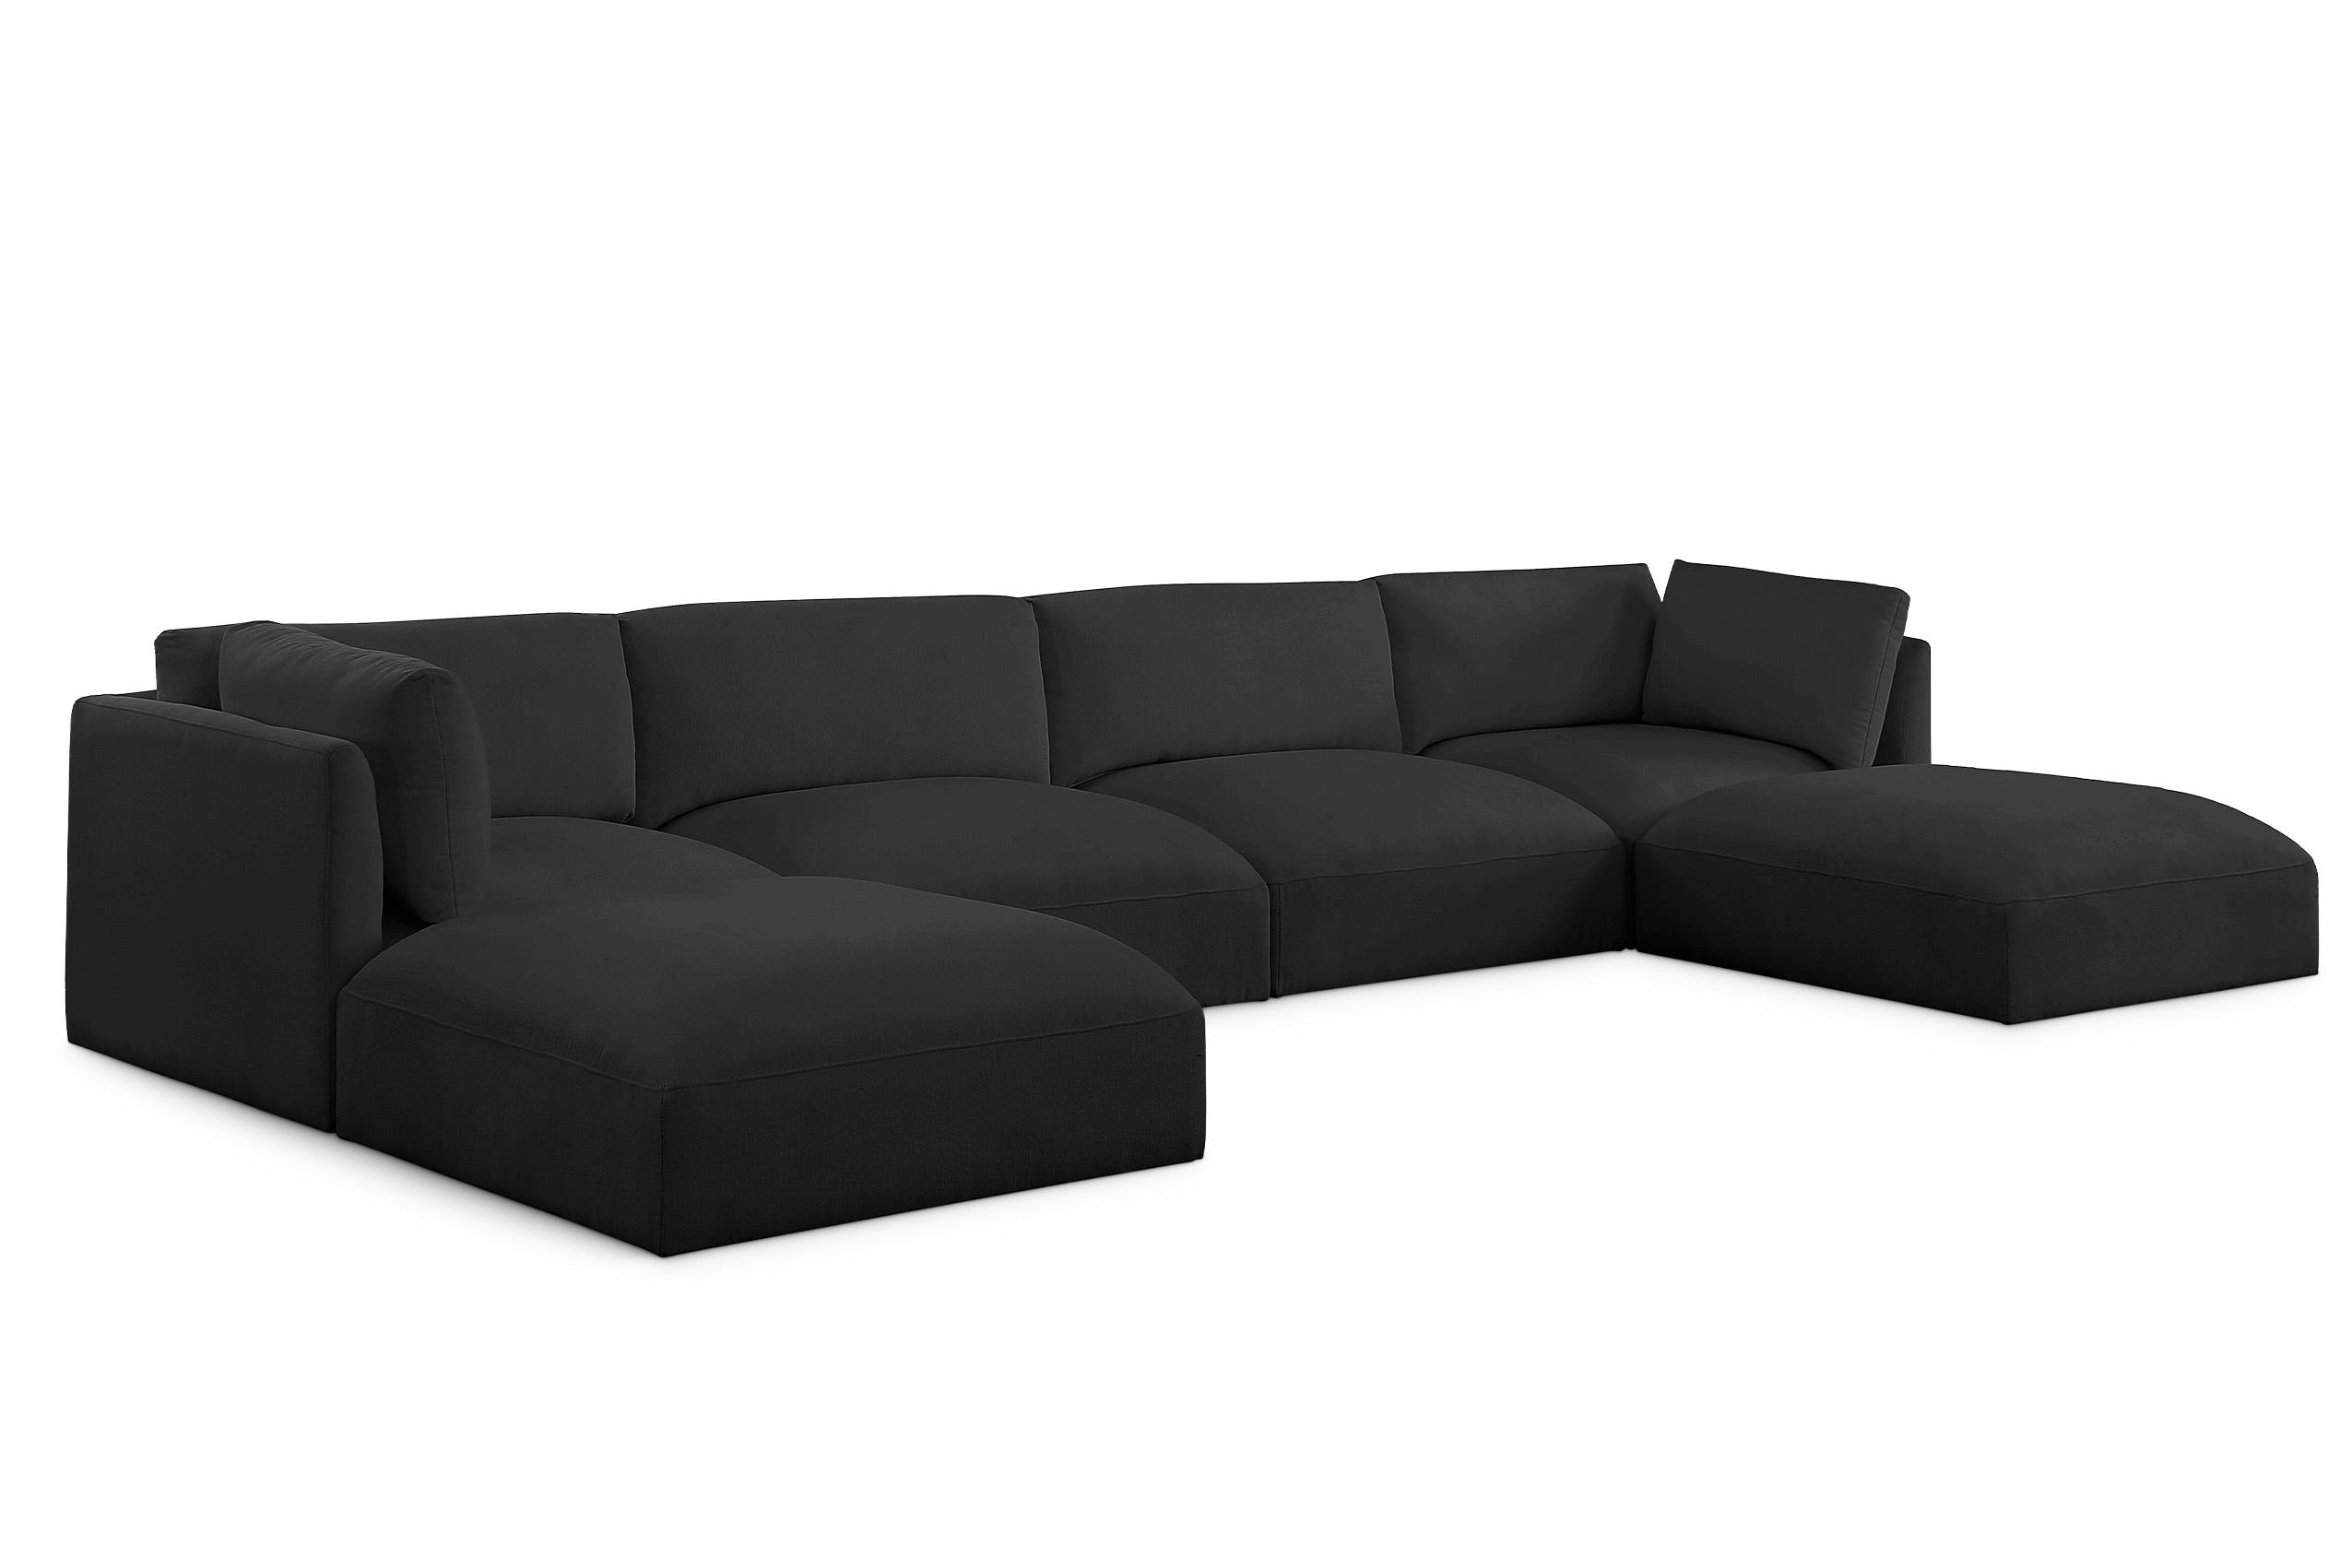 Contemporary, Modern Modular Sectional Sofa EASE 696Black-Sec6C 696Black-Sec6C in Black Fabric